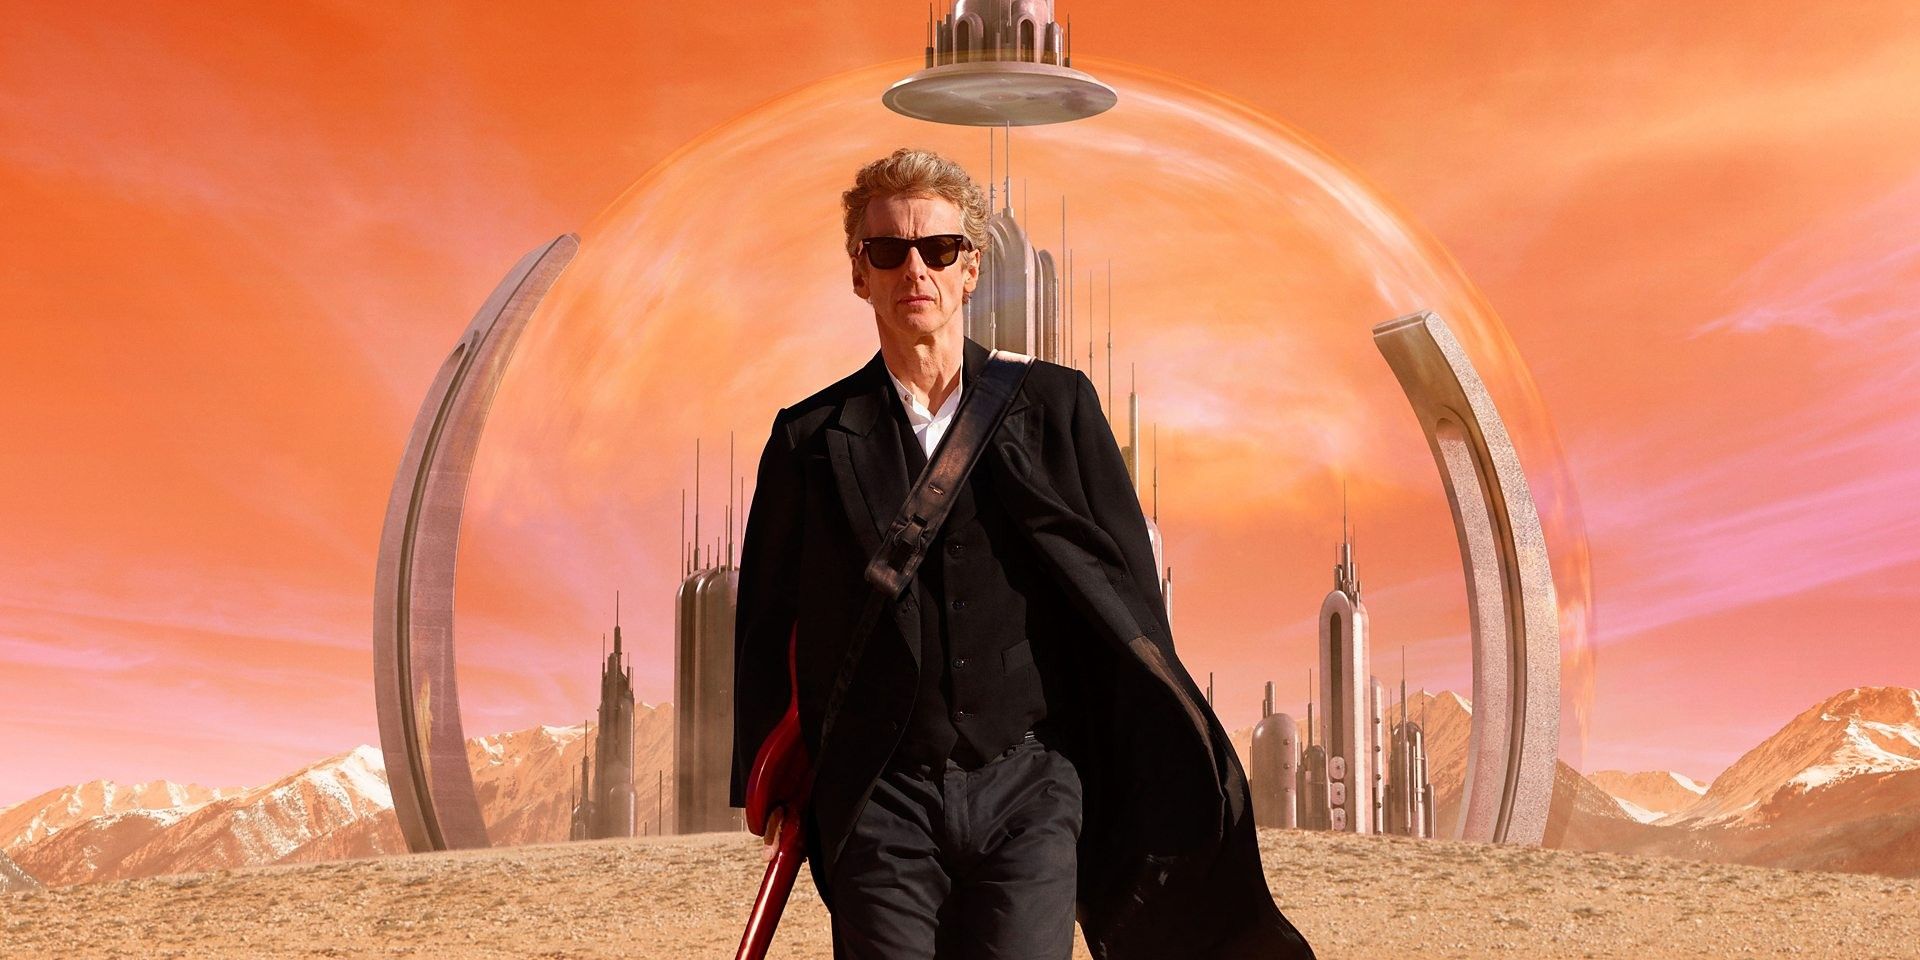 Doctor Who's Twelfth Doctor Peter Capaldi on Gallifrey during Hell Bent episode